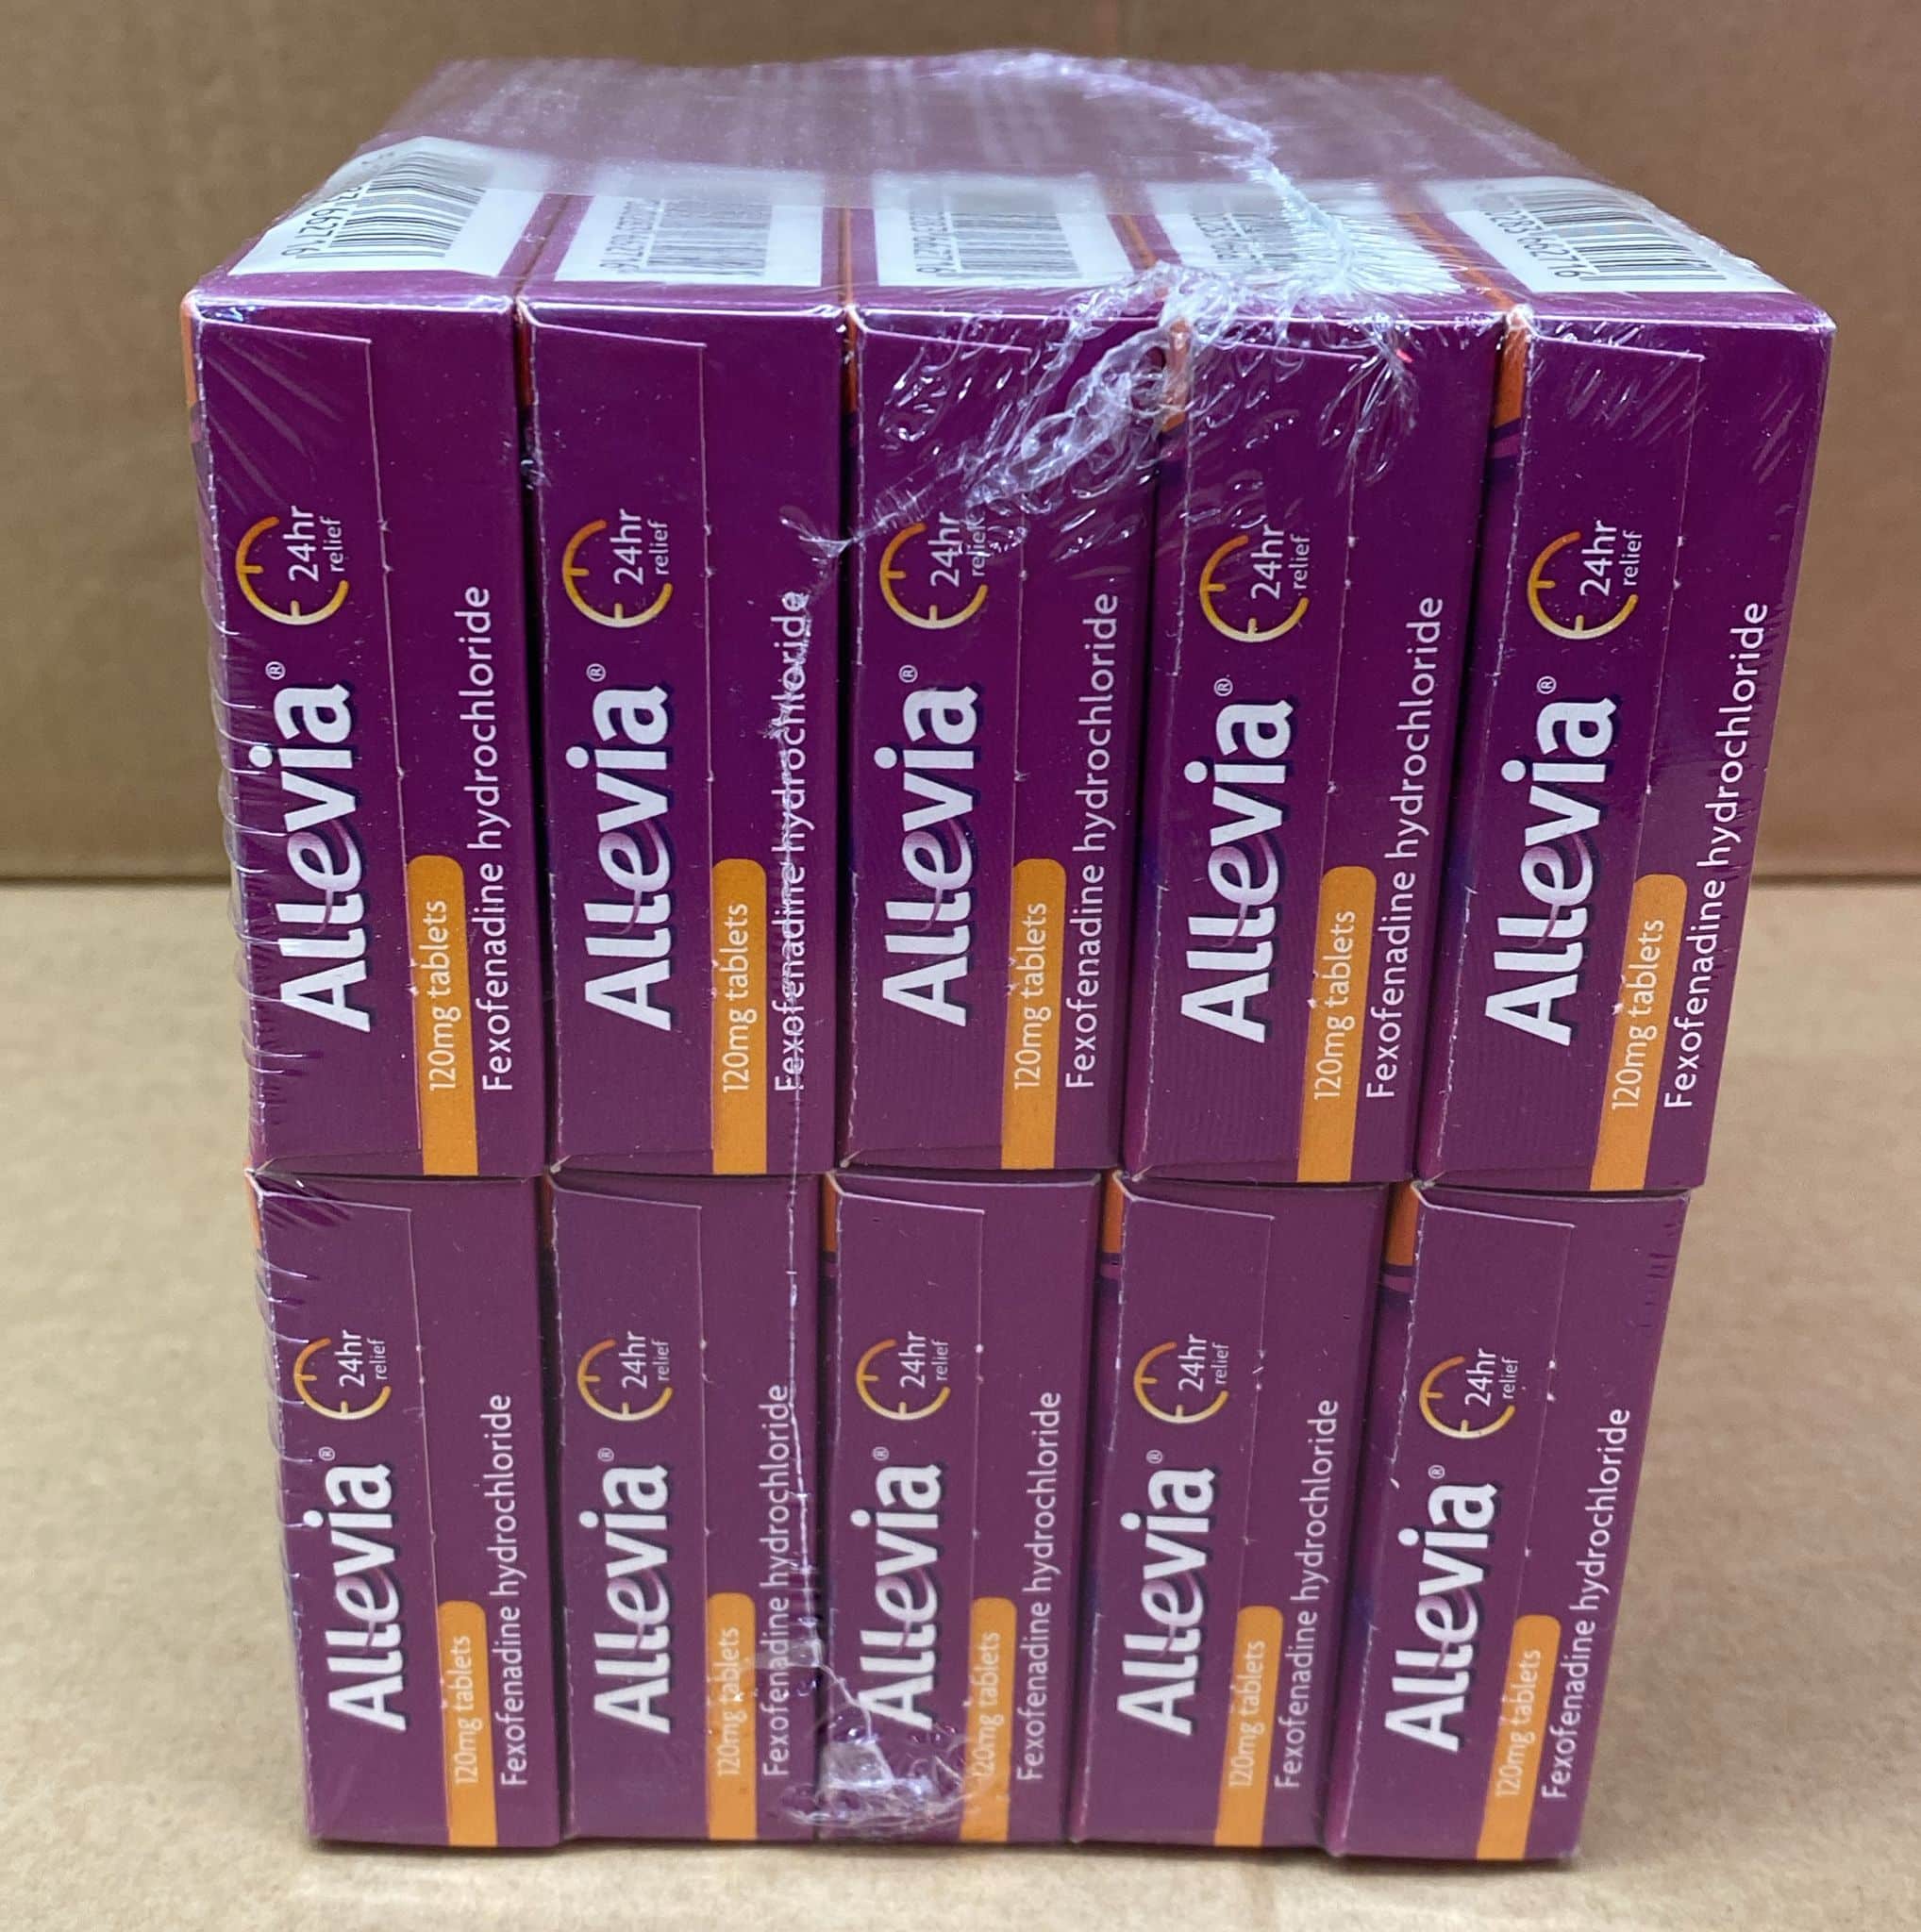 Allevia Allergy Tablets|Multipack of 10 Prescription 2717